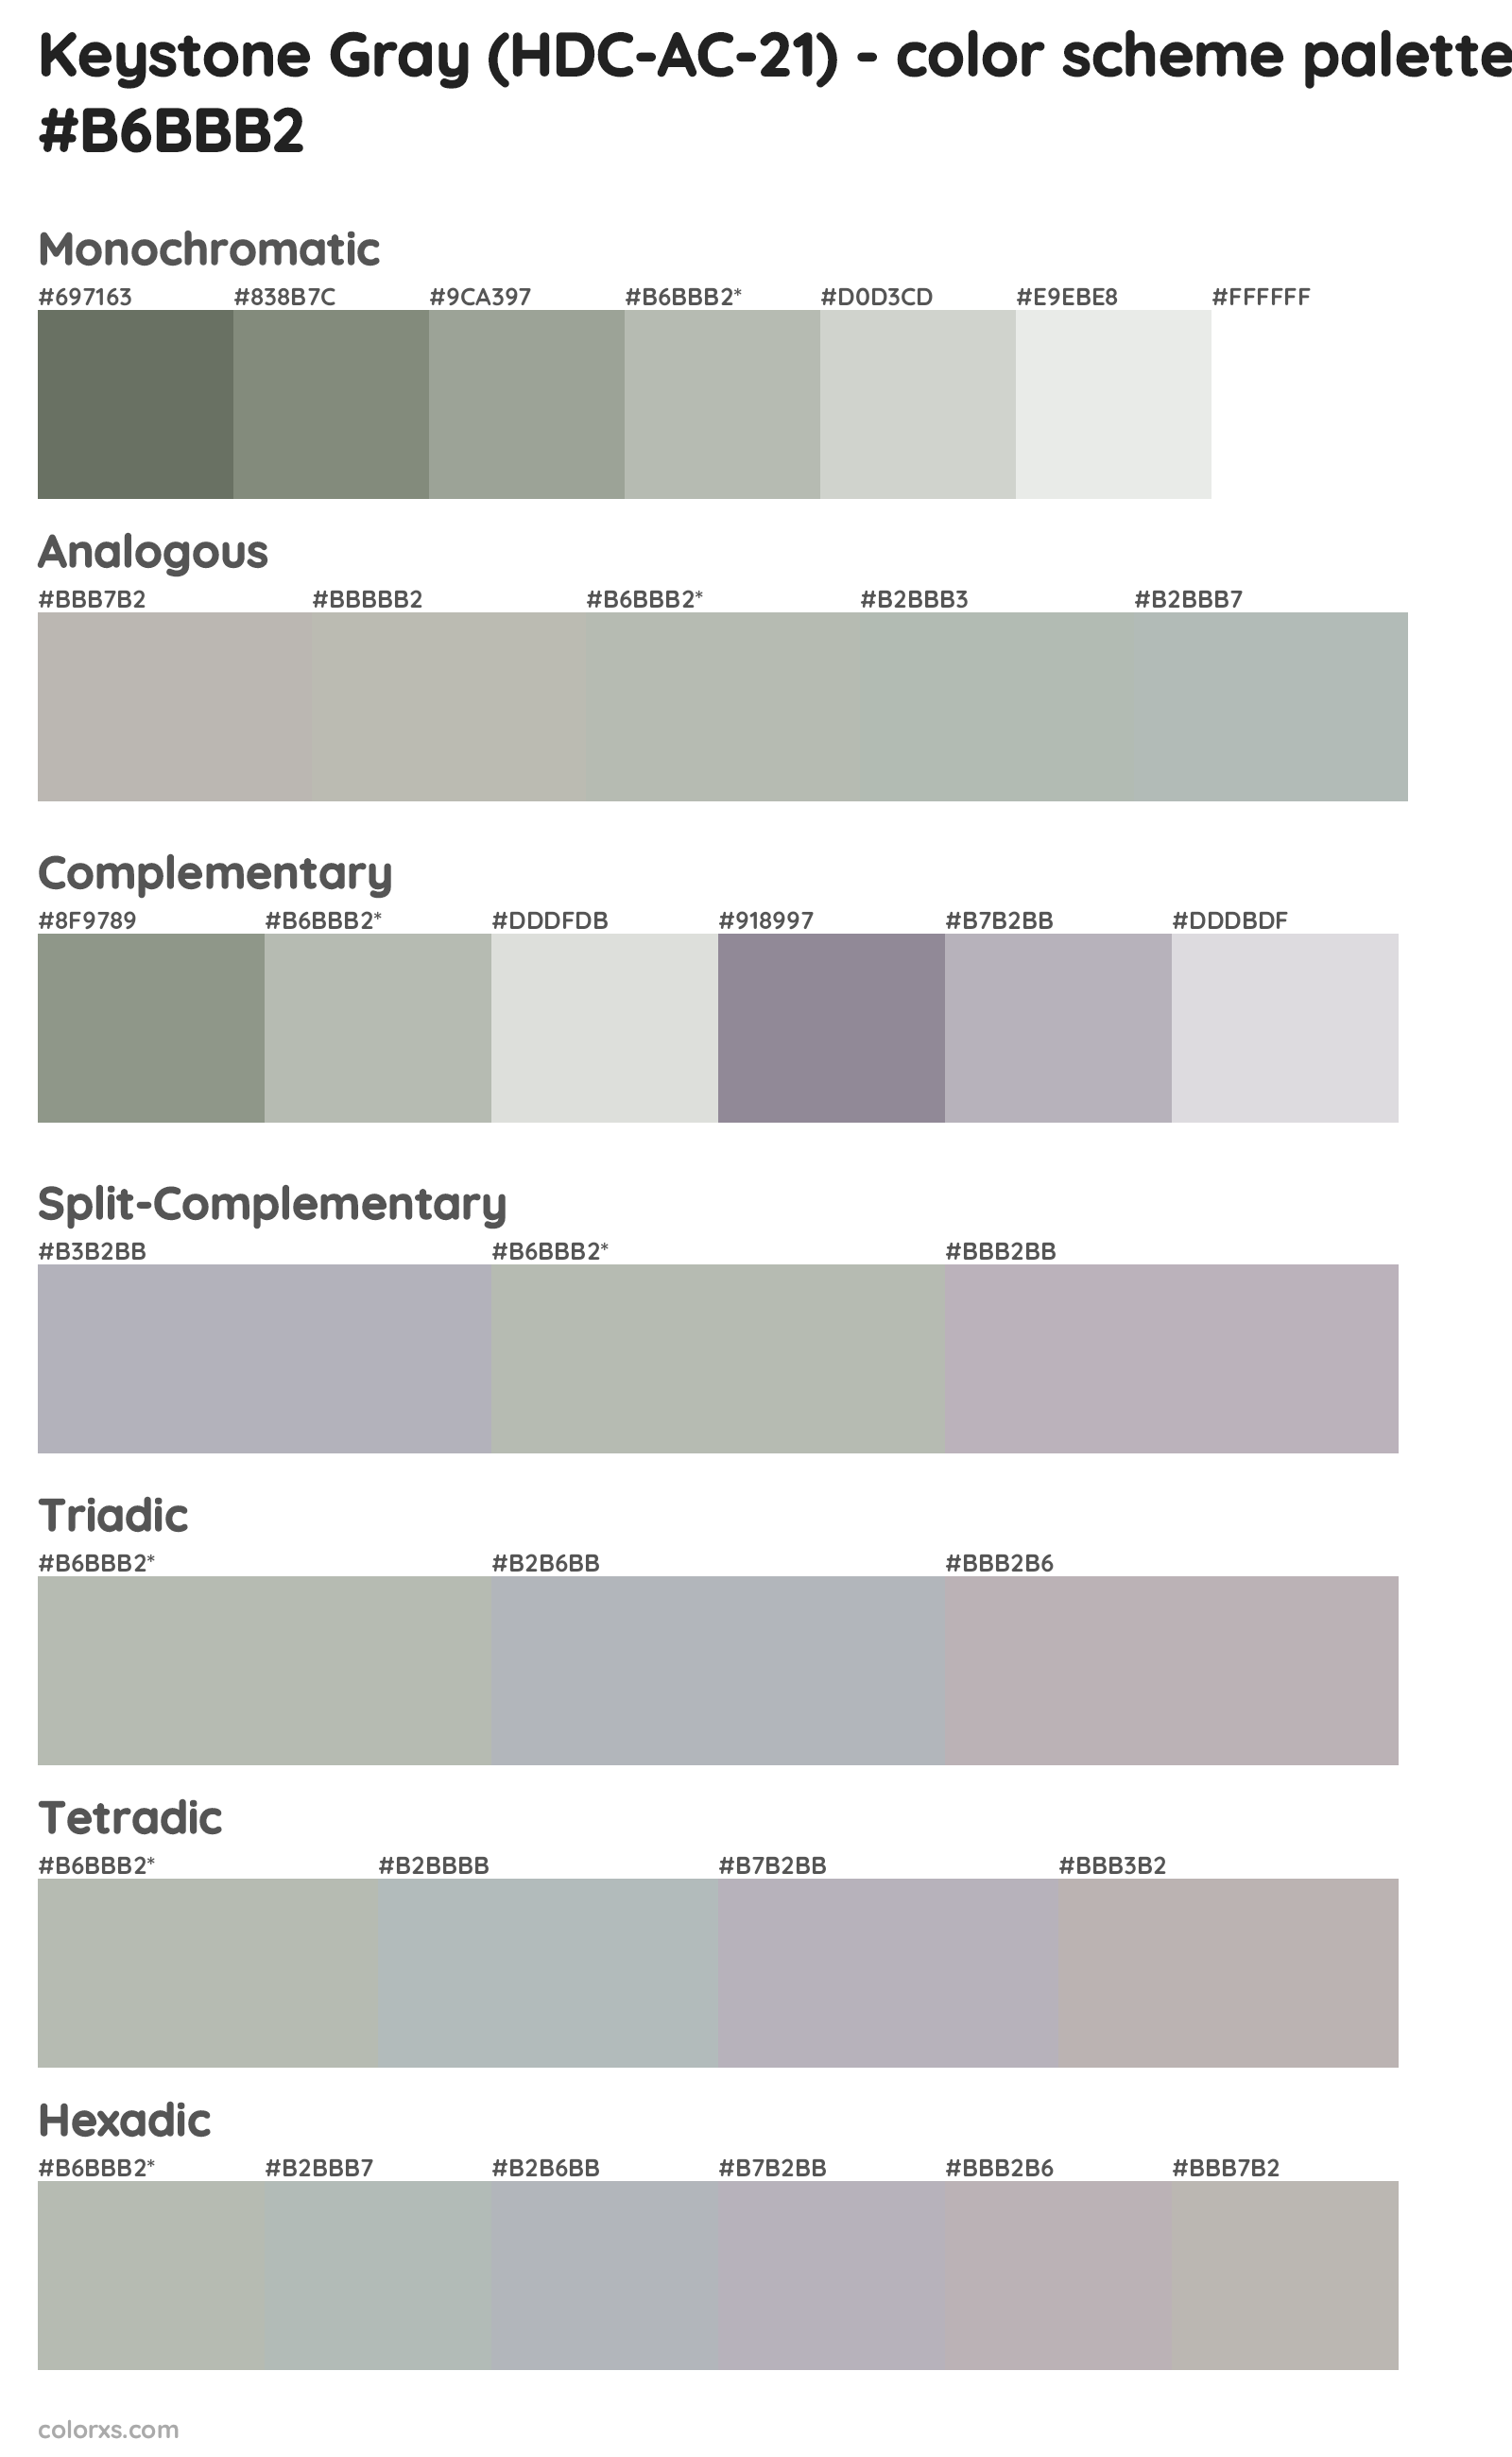 Keystone Gray (HDC-AC-21) Color Scheme Palettes